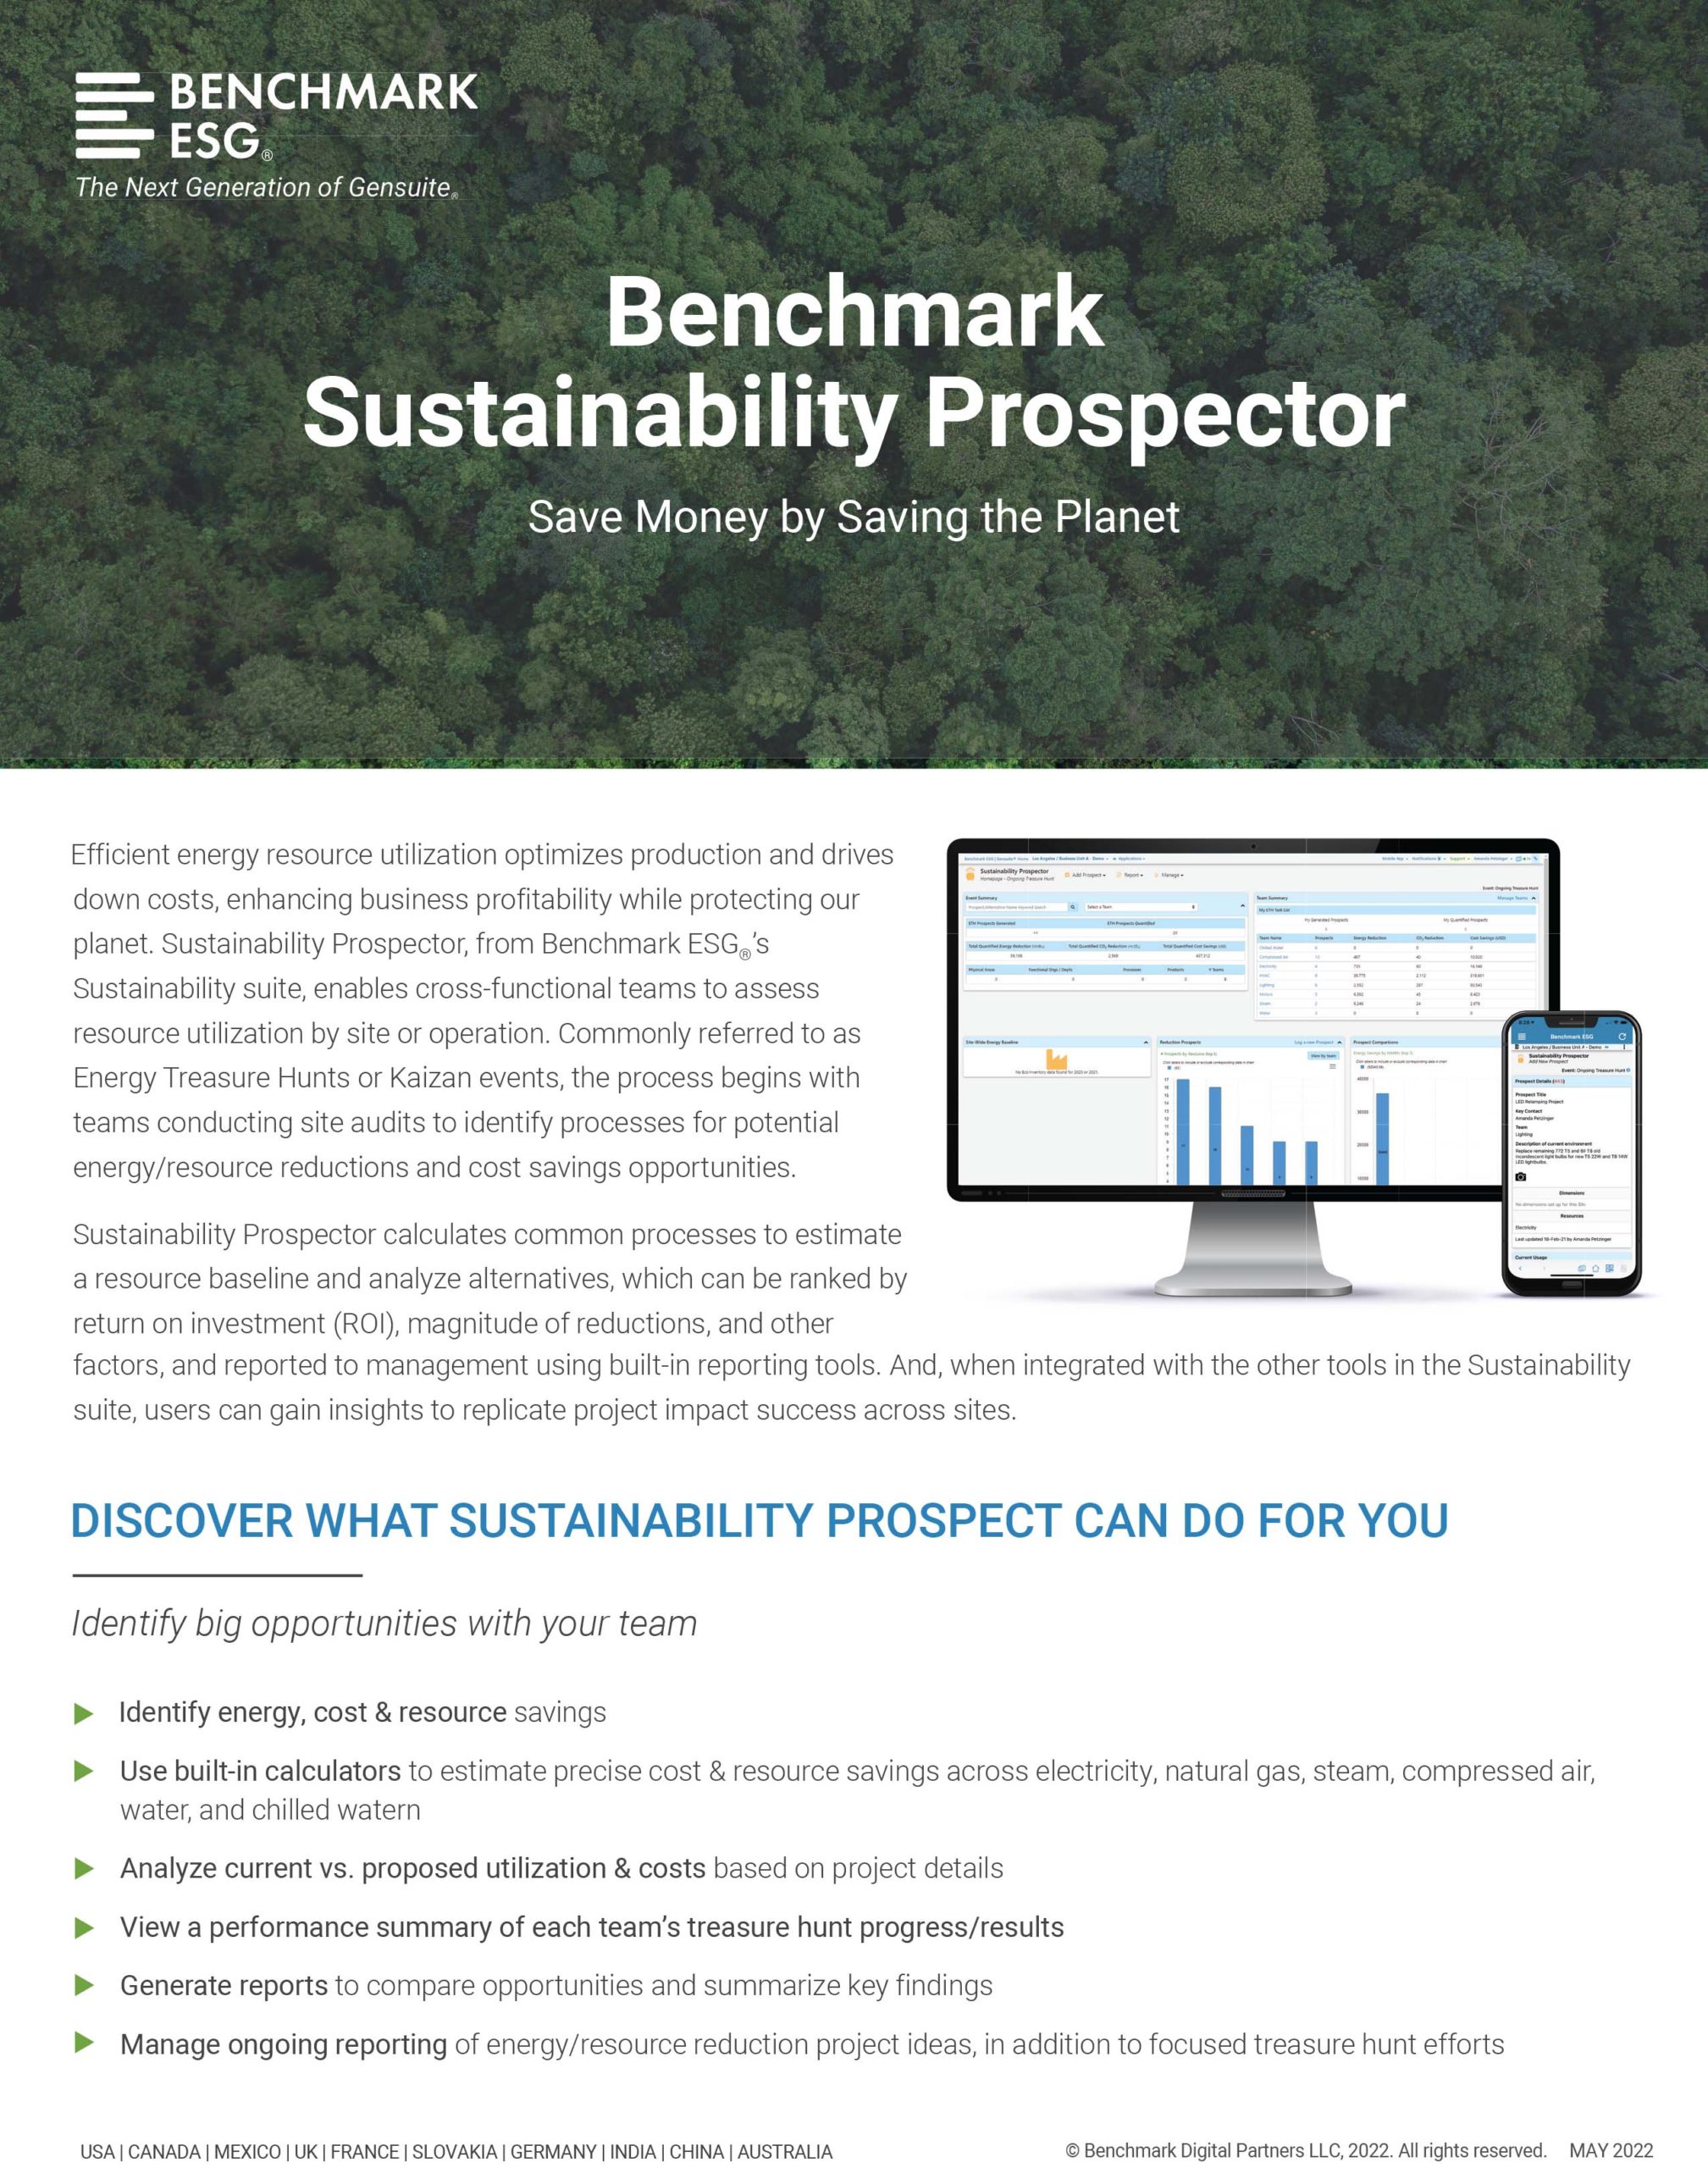 Sustainability Prospector